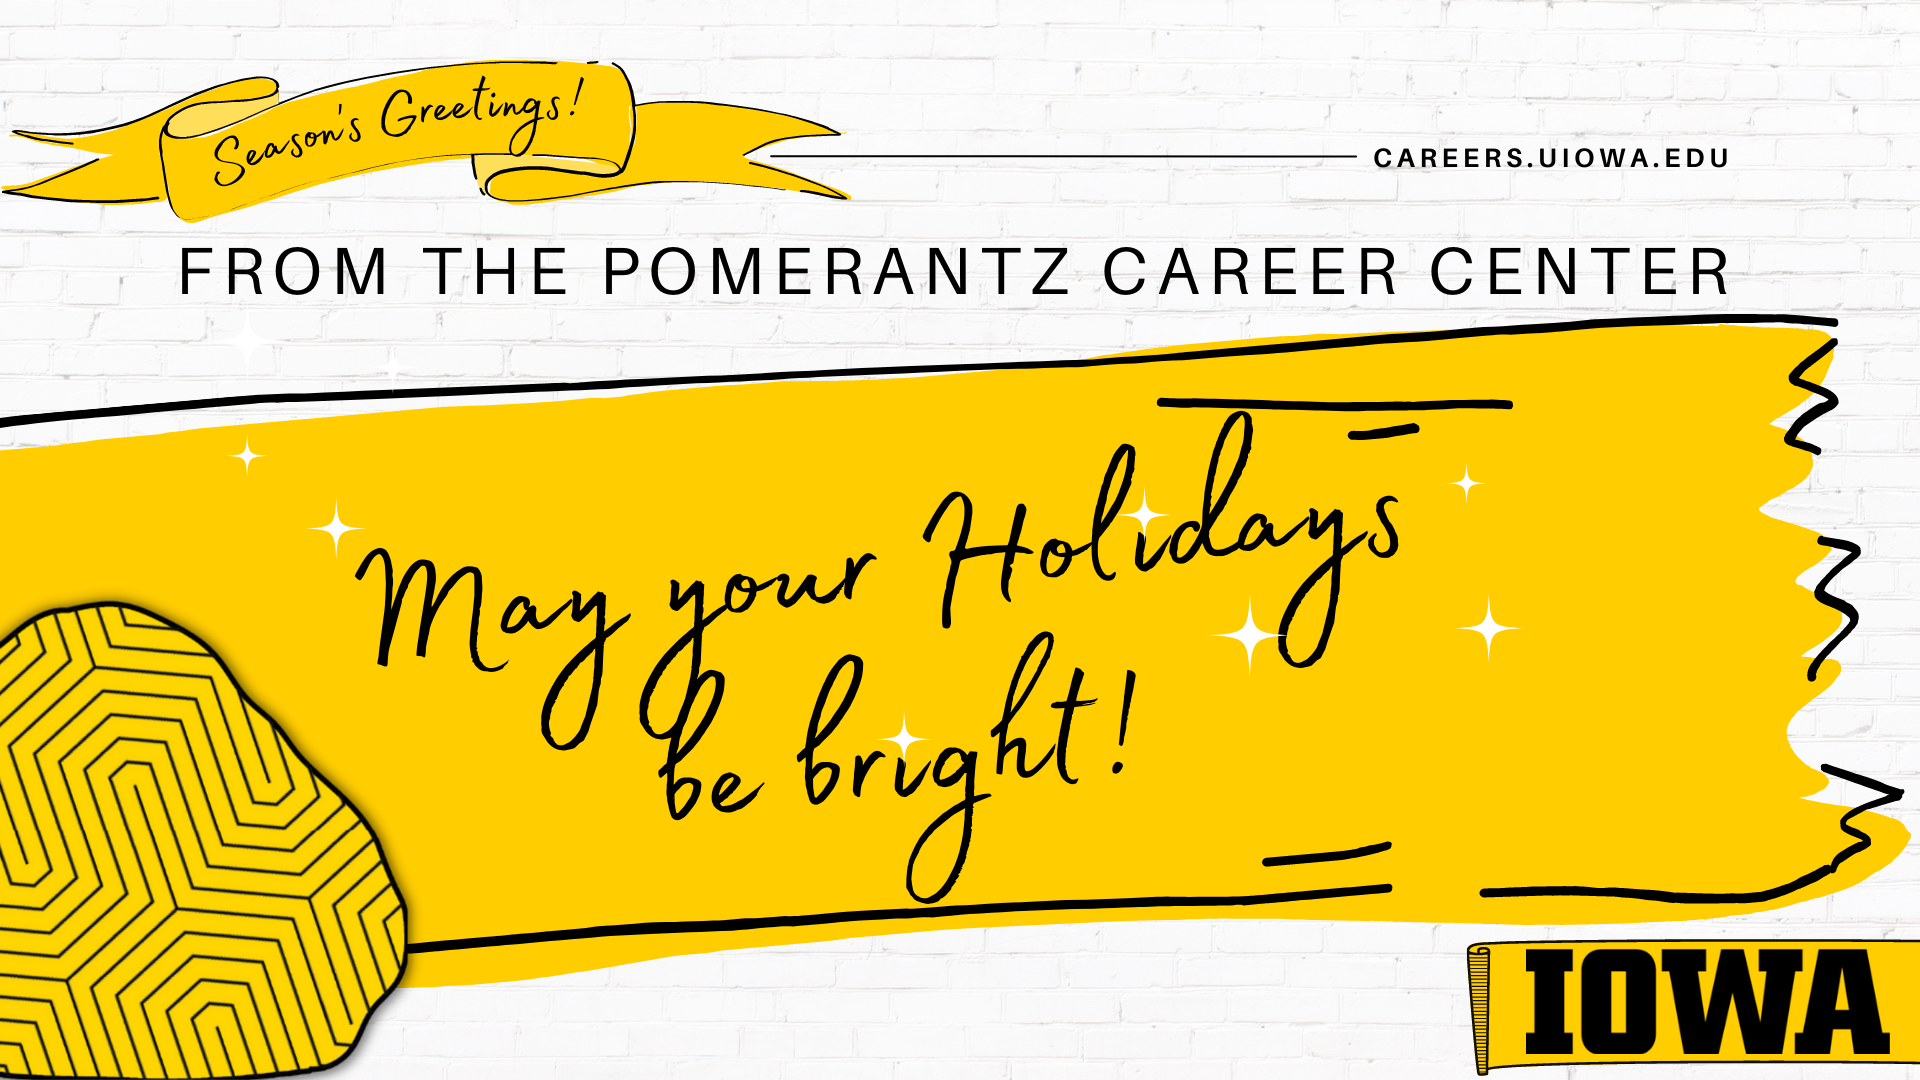 Season's Greetings from the Pomerantz Career Center May your Holidays be bright Iowa